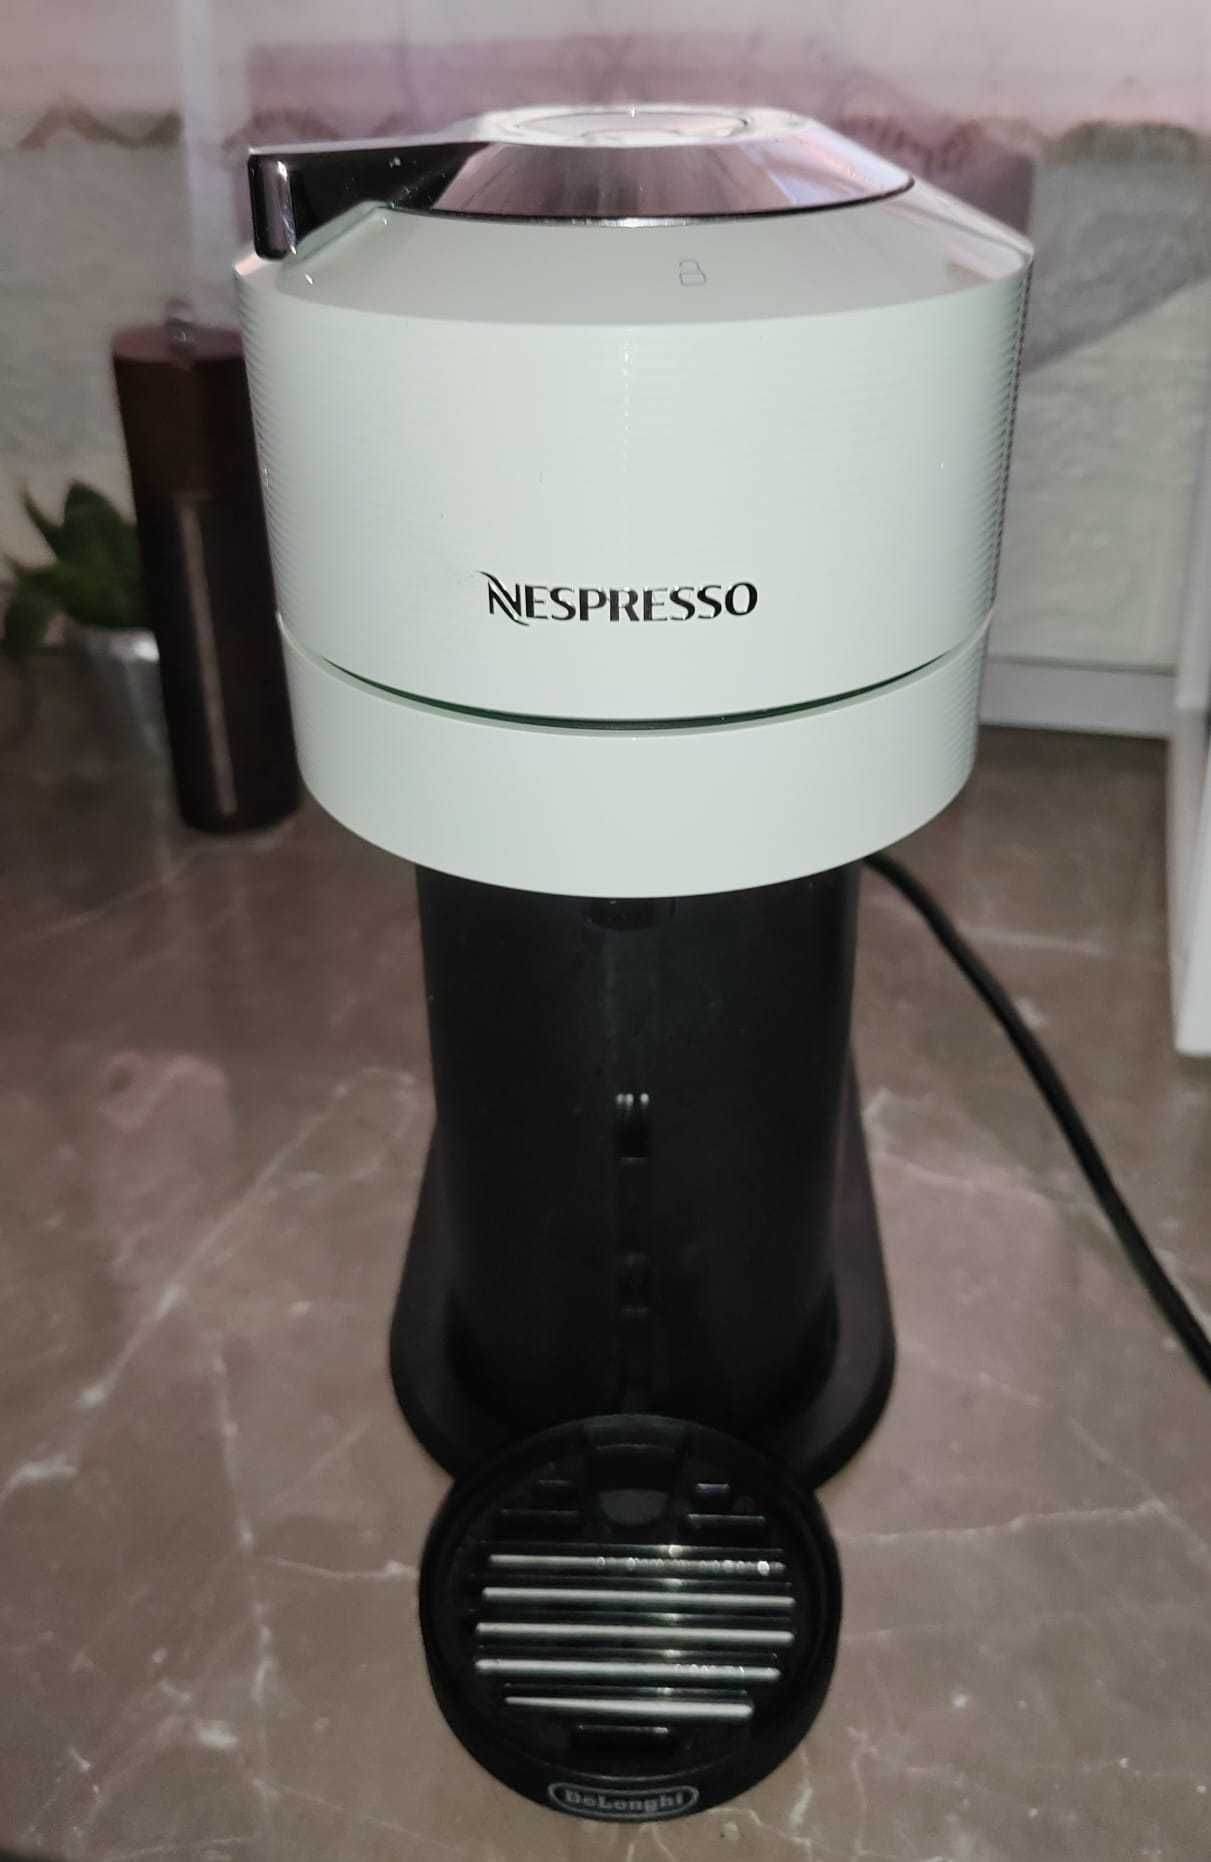 Espressor Nespresso De'Longhi Vertuo Next ENV120.W